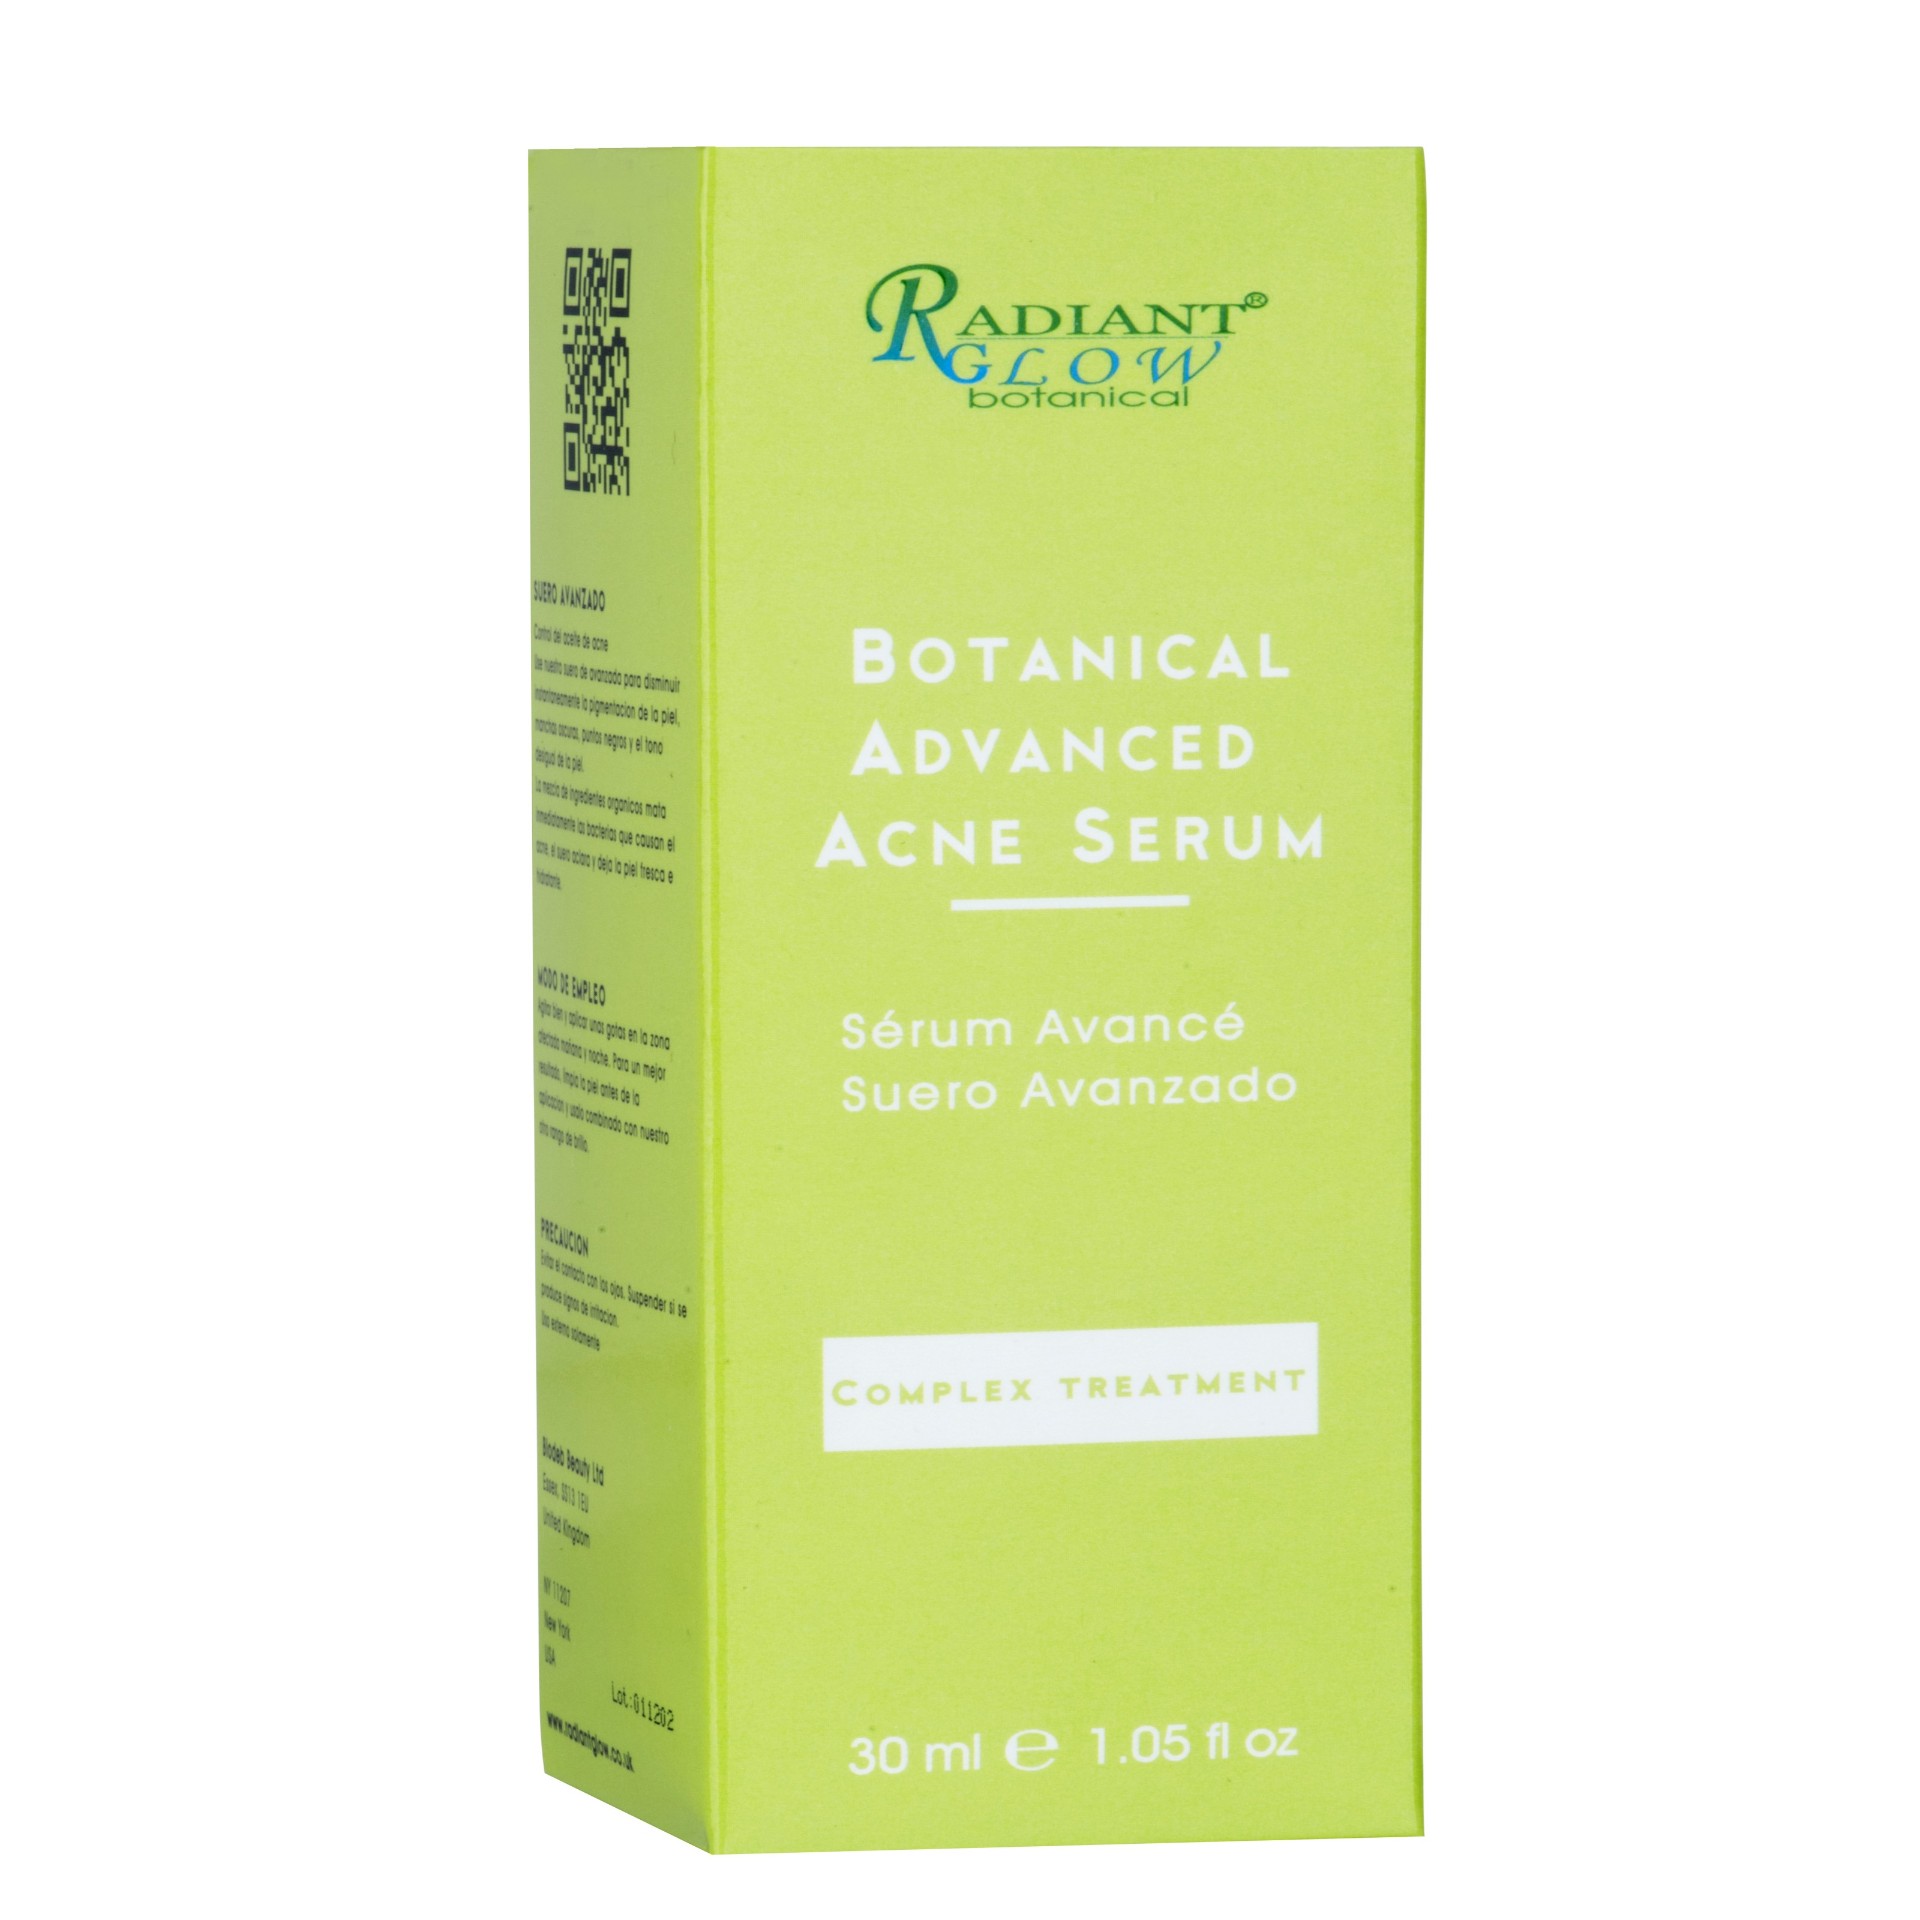 Botanical Advanced Acne Serum 30ml Radiant Glow Botanical